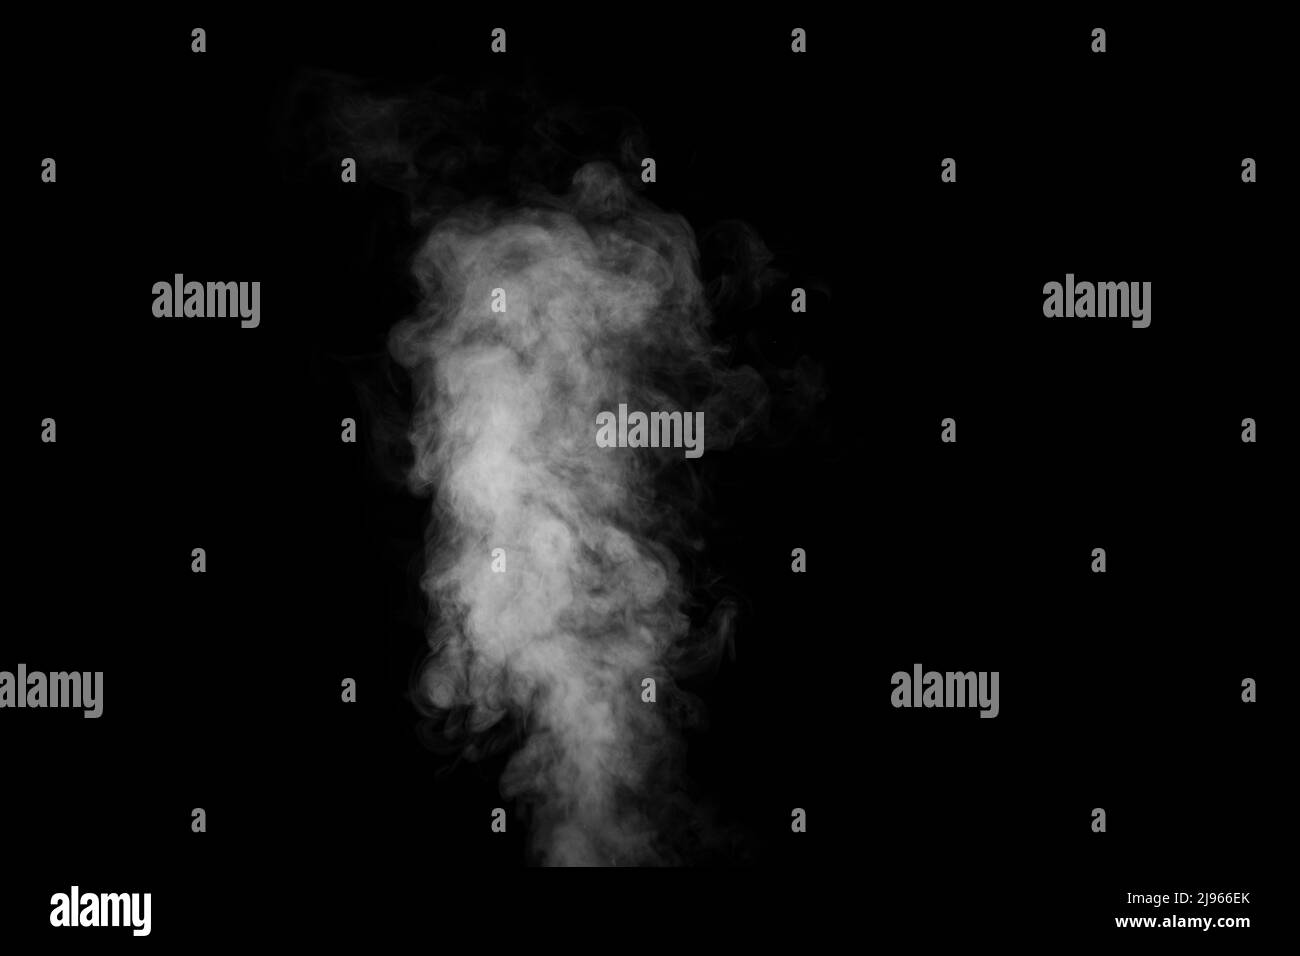 Smoke movement on a black background, smoke background, abstract smoke on a black background. Abstract background fog or smog, design element, layout Stock Photo